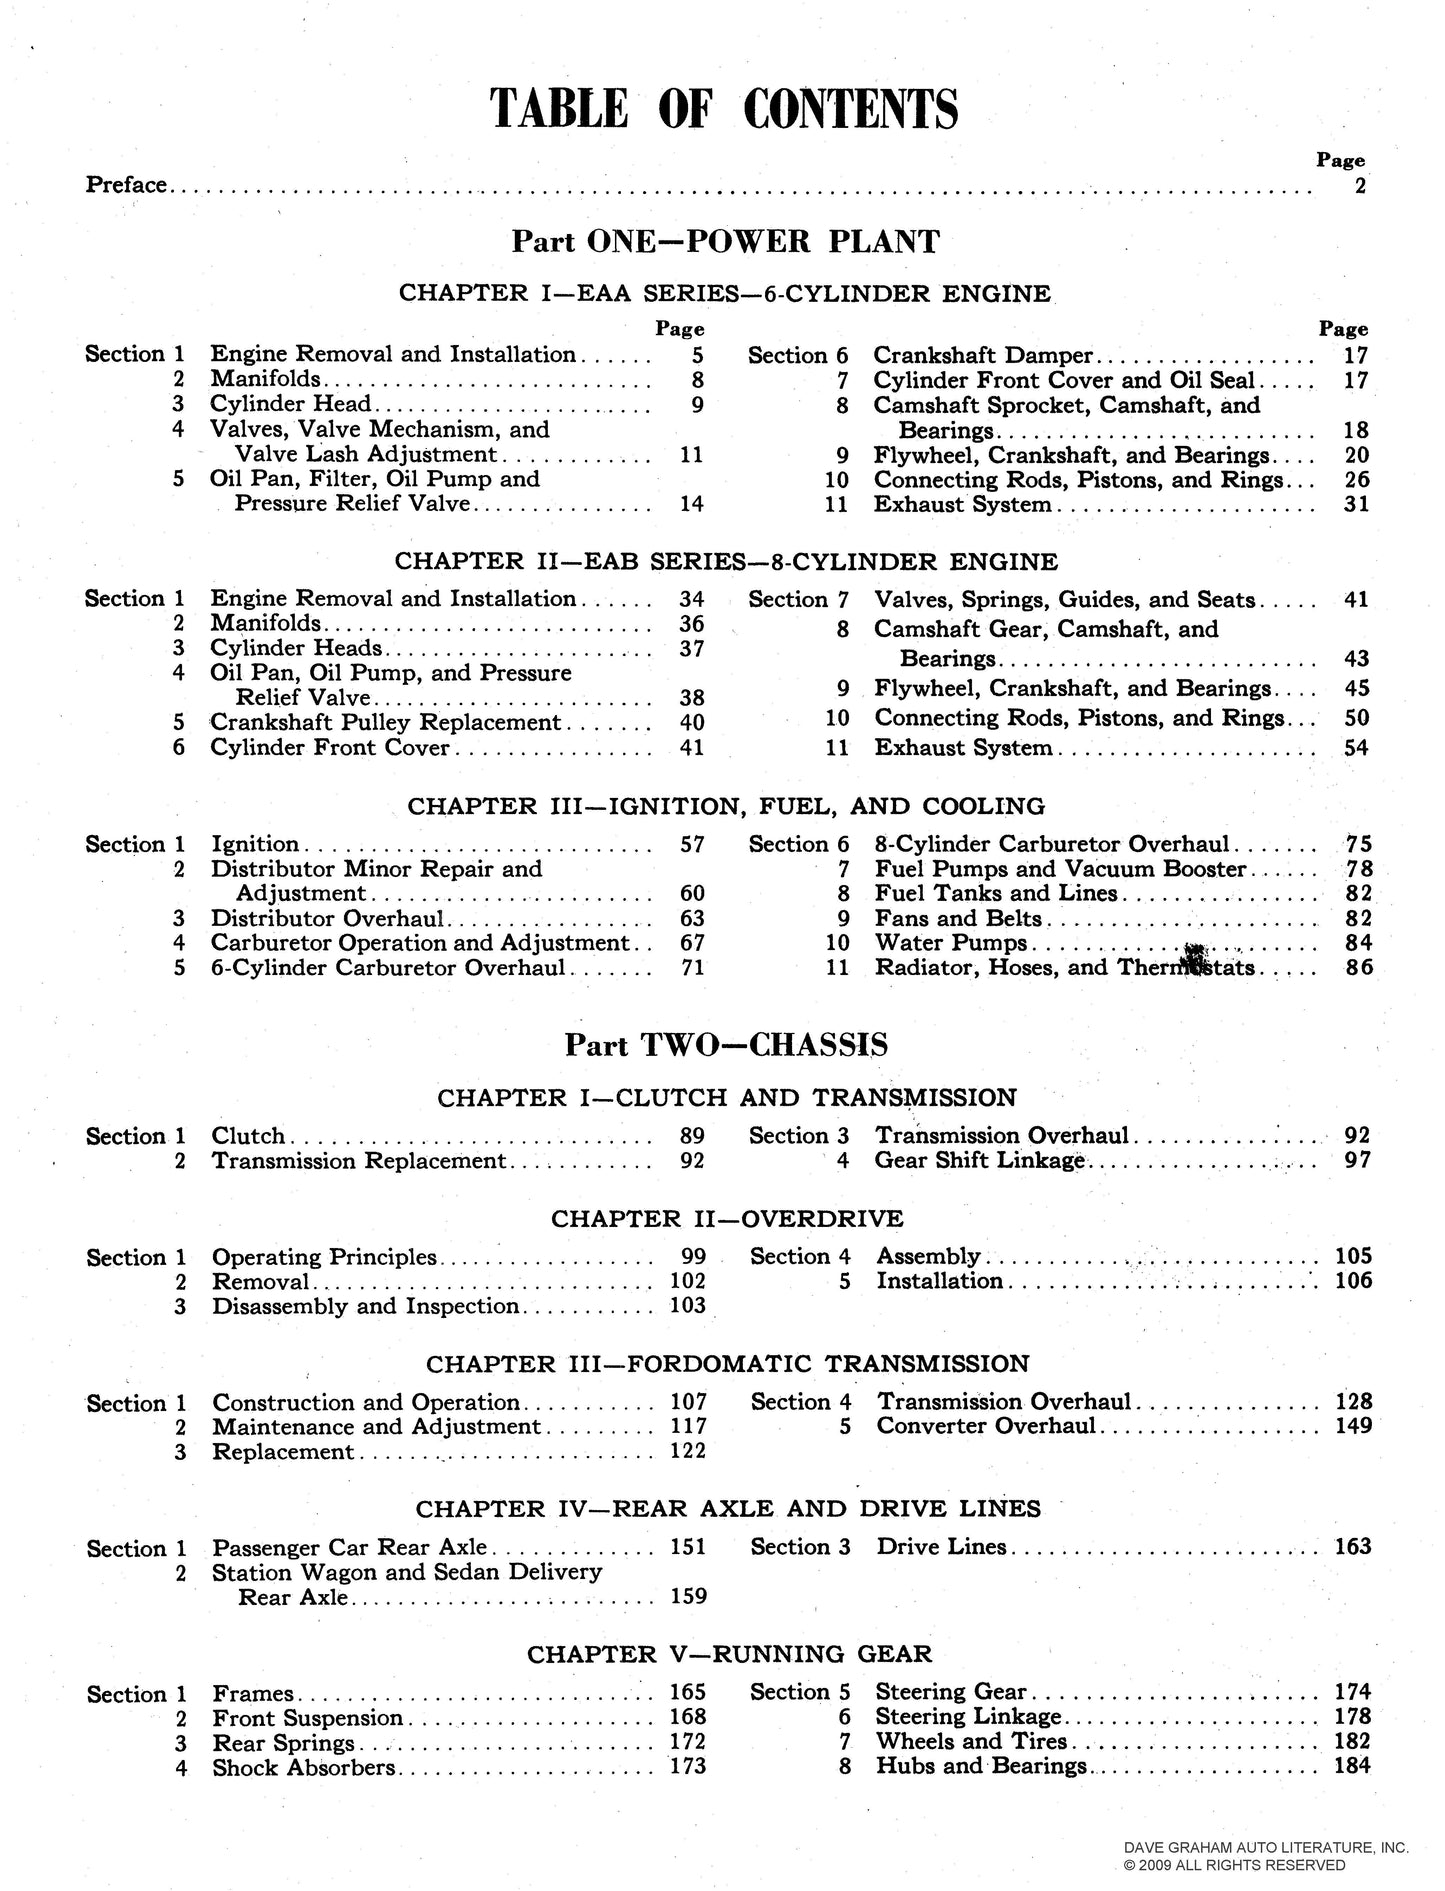 1952-1954 Ford Shop Manual - All Models